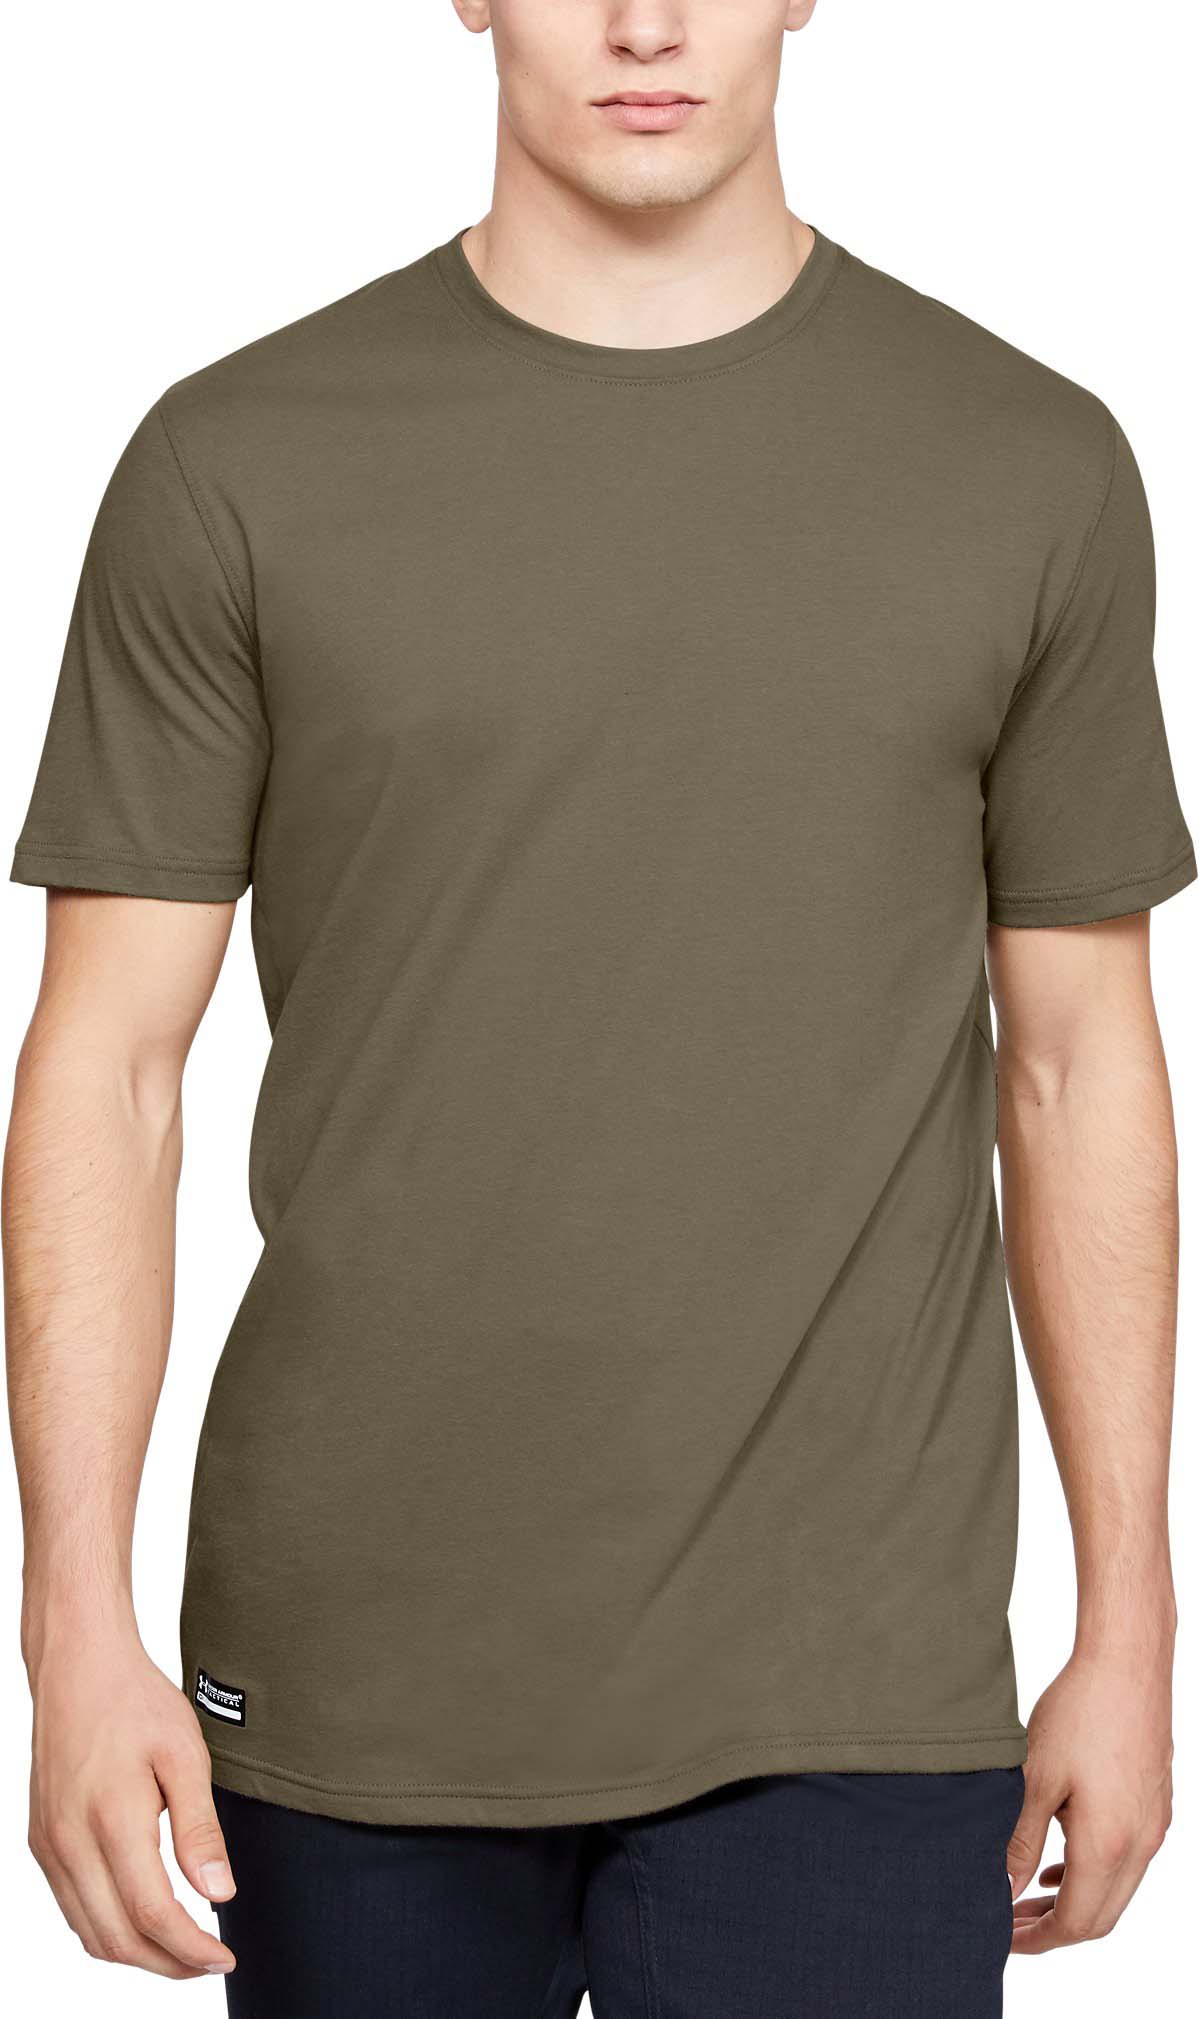 Under Armour Women's Tac ColdGear Infrared Base T-Shirt , Federal